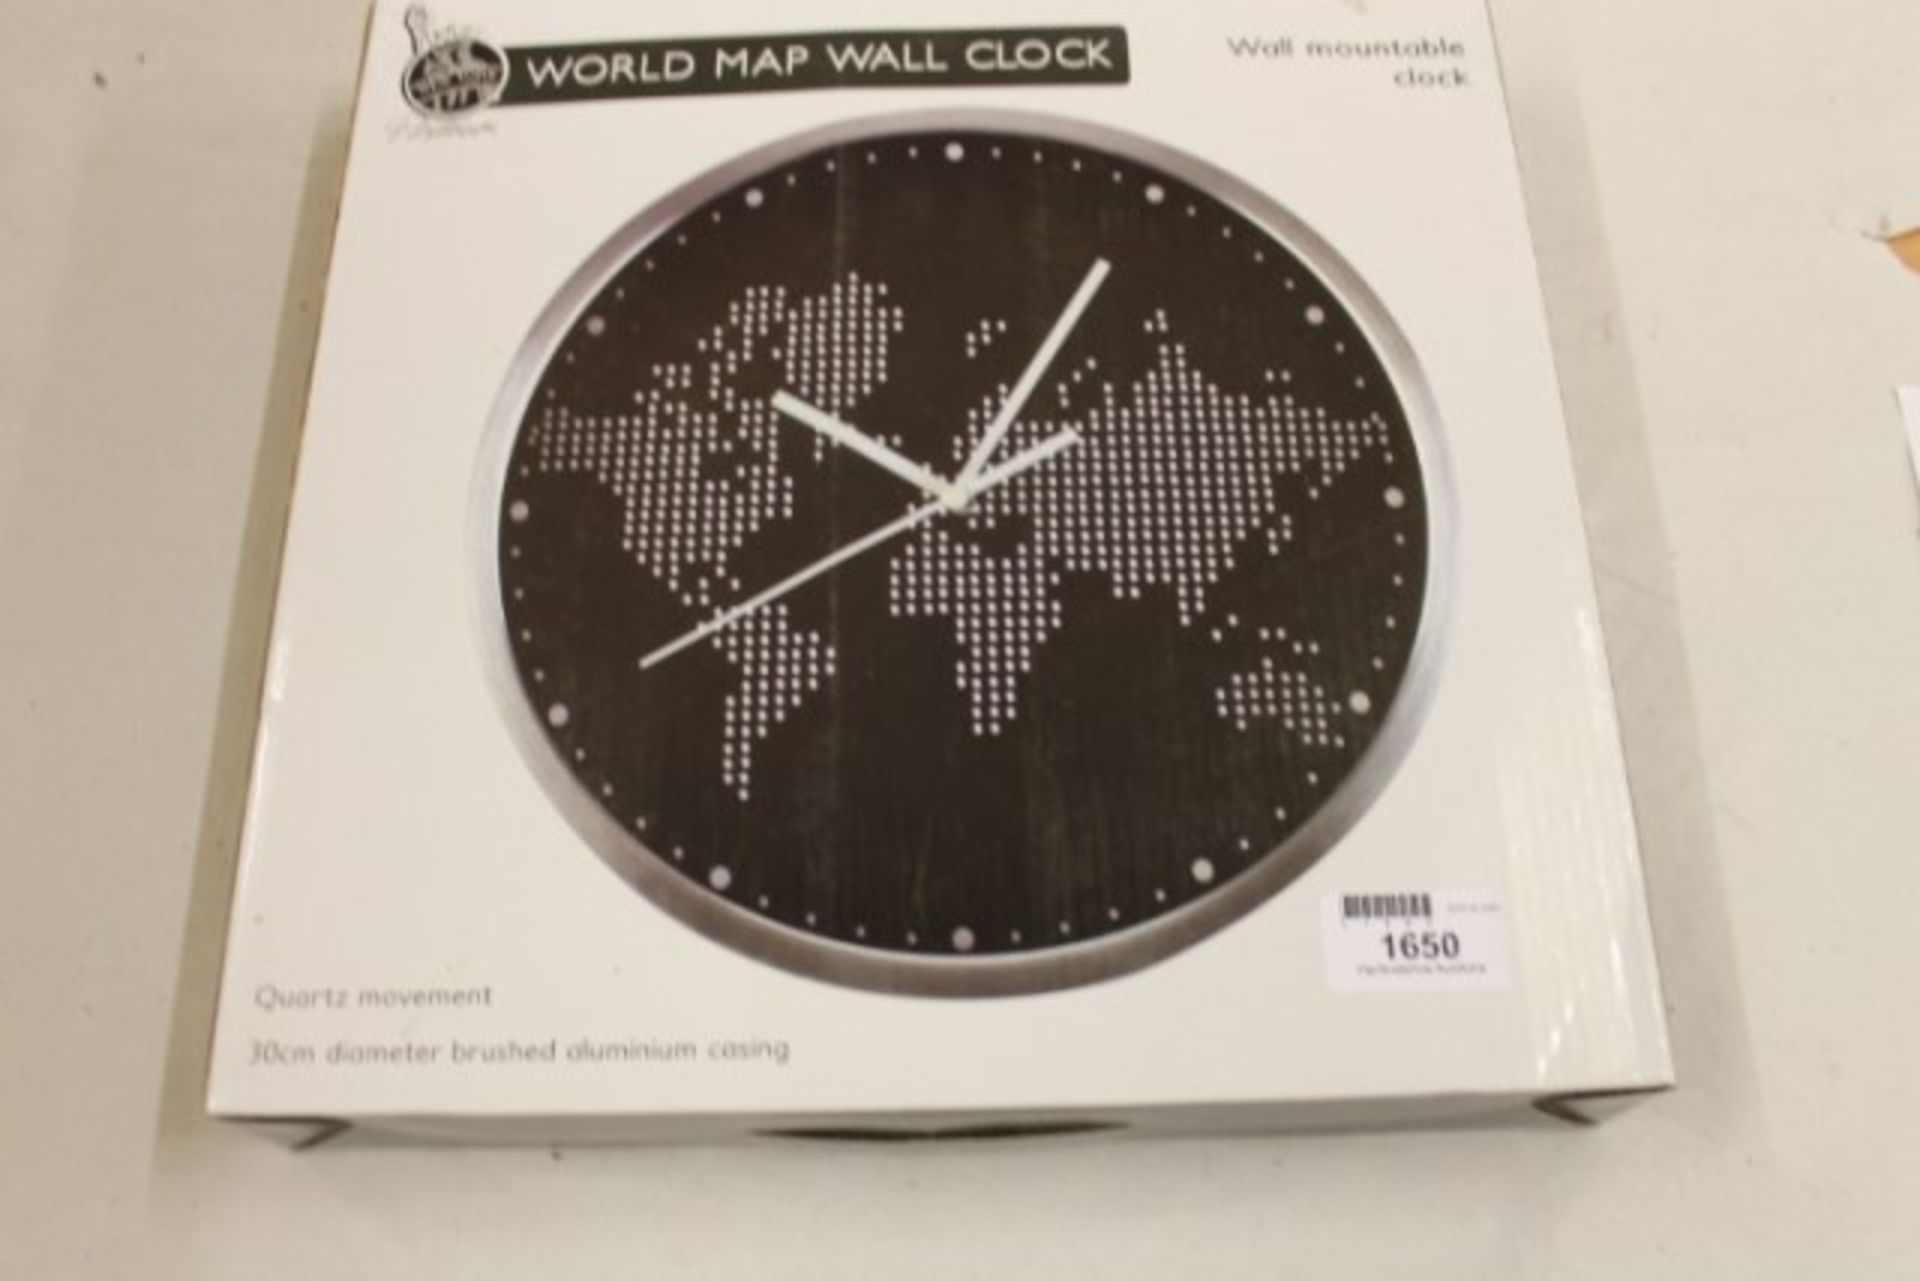 V Grade B Brushed Aluminium Cased 30cm World Map Wall Clock RRP39.99 X 3 Bid price to be